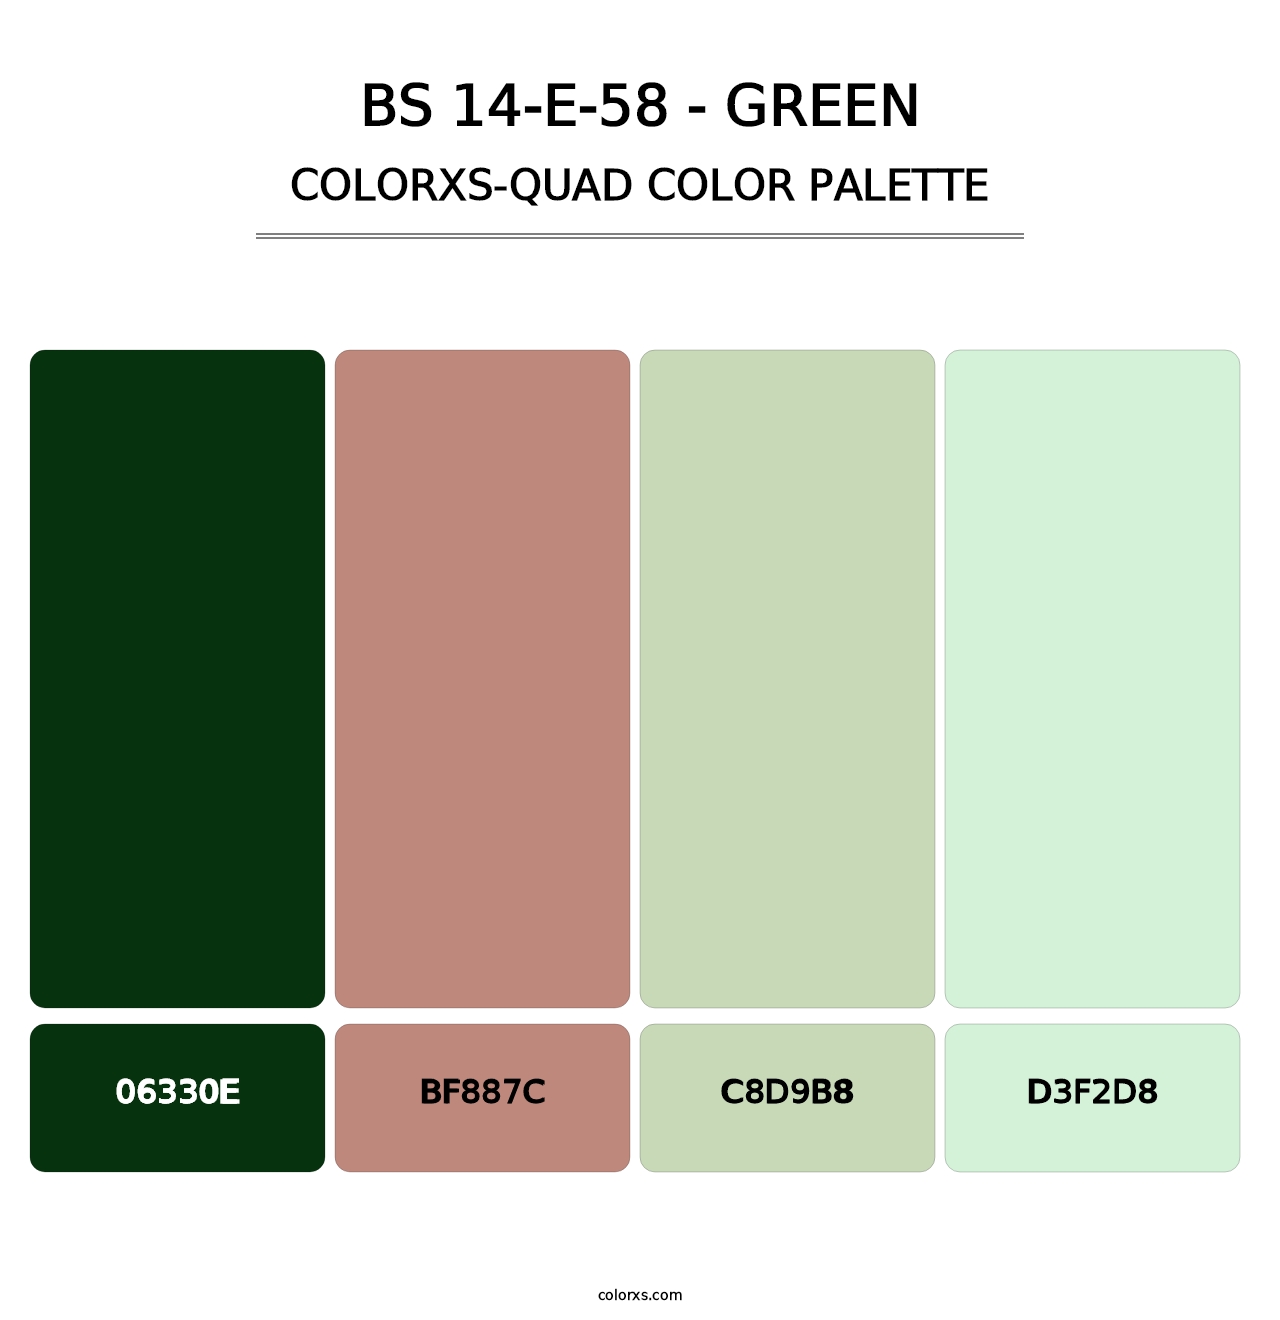 BS 14-E-58 - Green - Colorxs Quad Palette